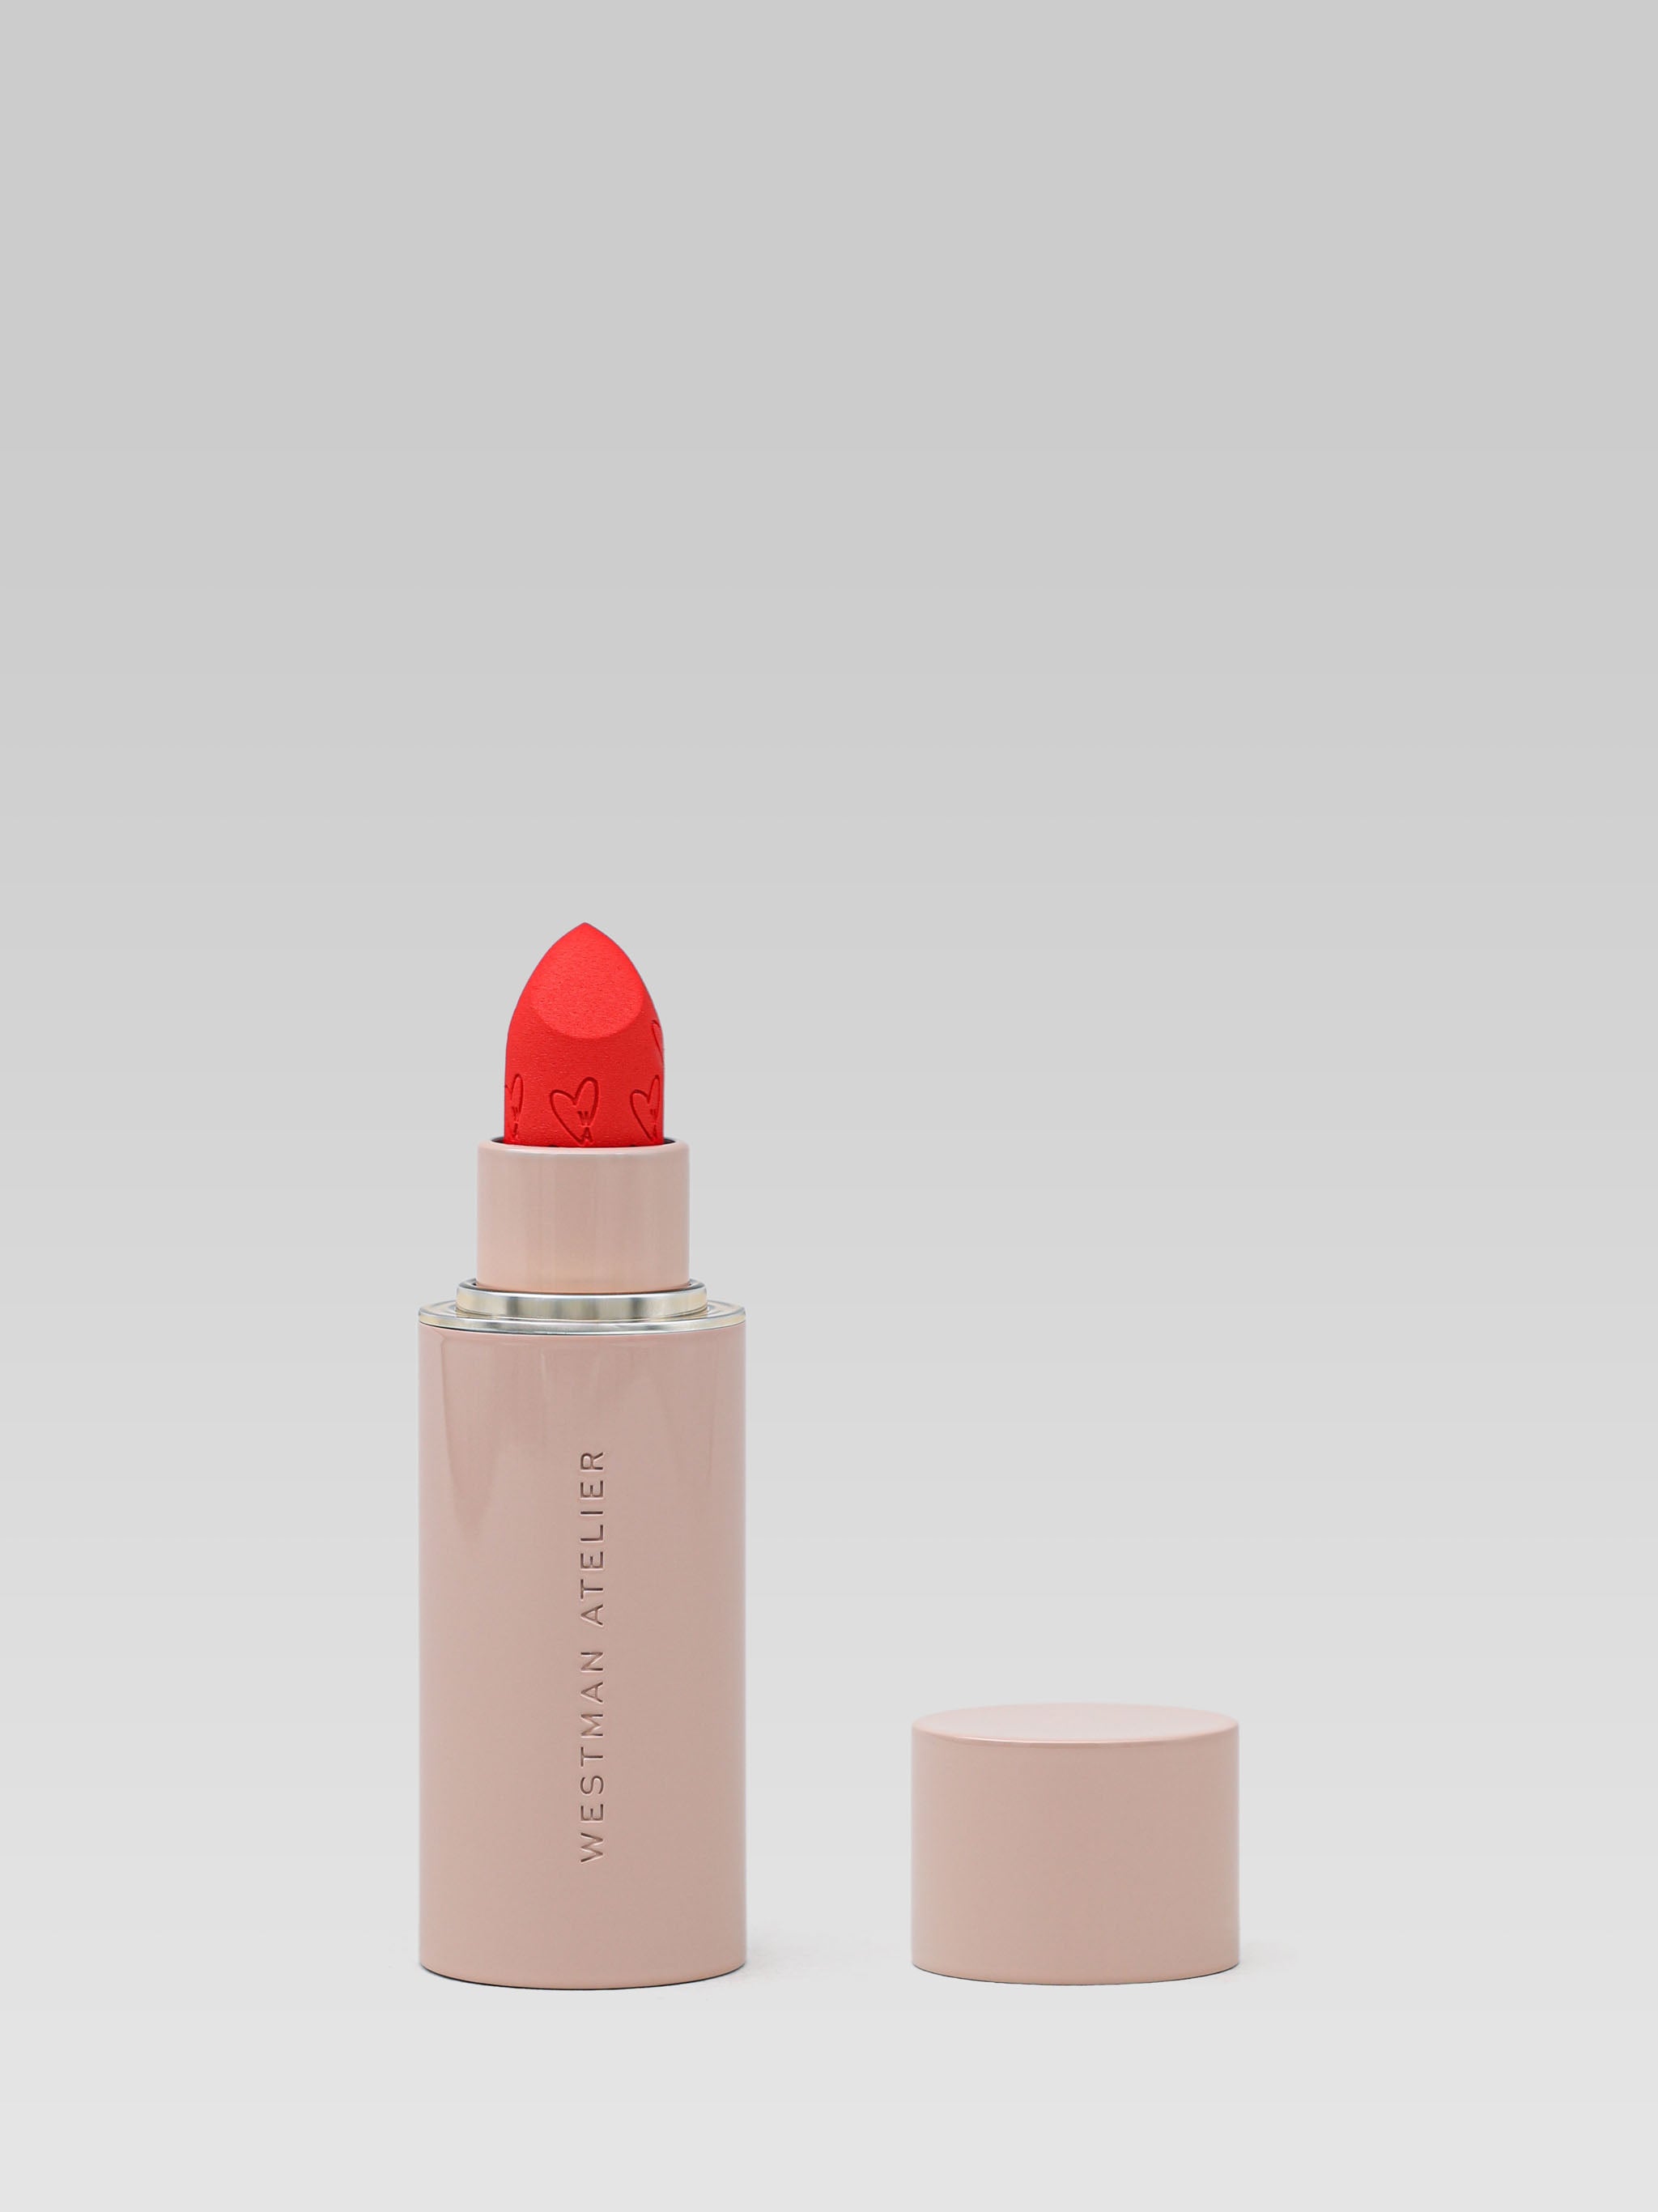 Westman Atelier Lip Suede Matte Lipstick in Le Rouge product shot